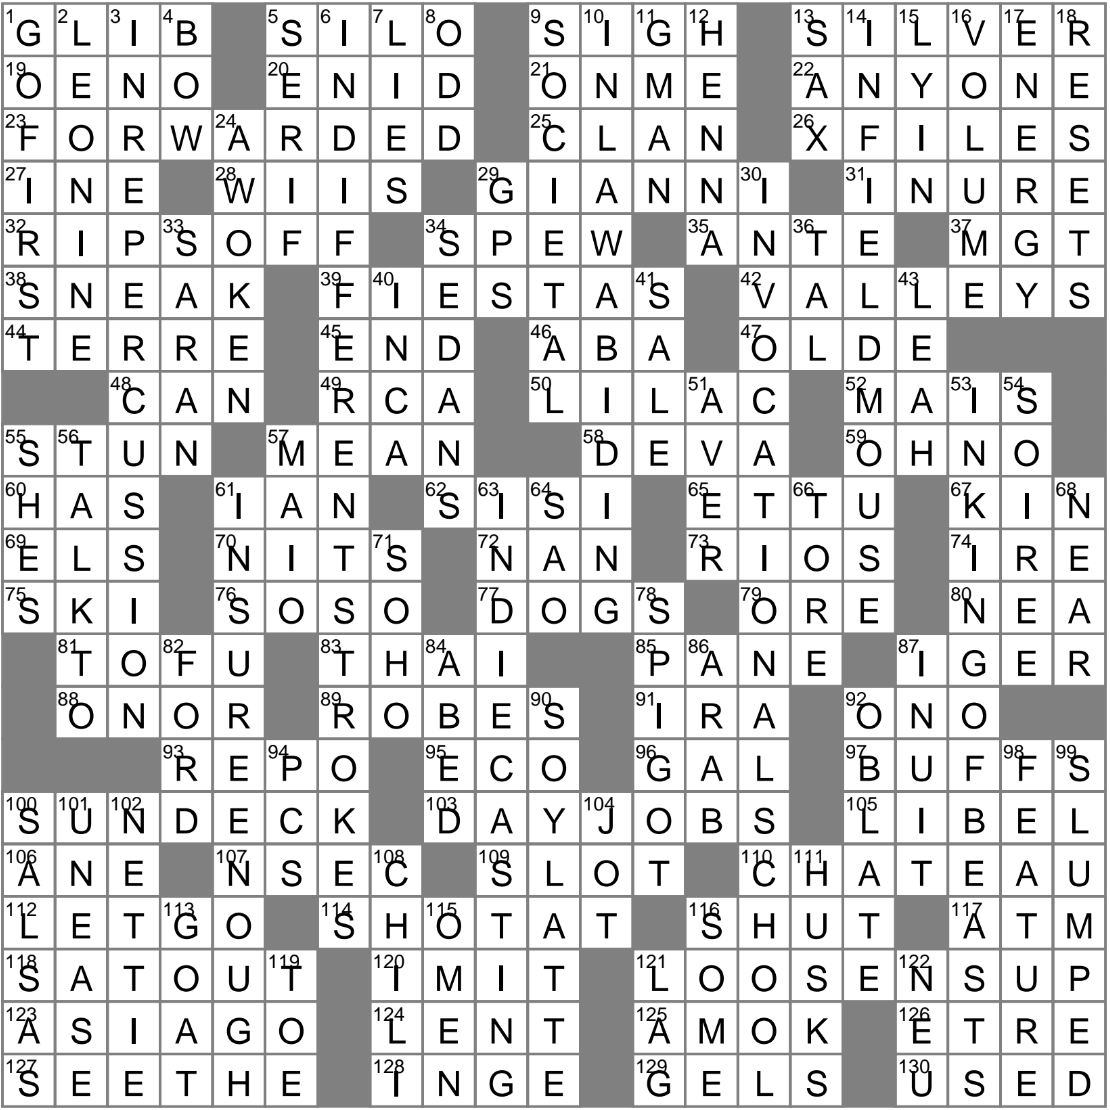 LA Times Crossword 1 Sep 23, Friday 